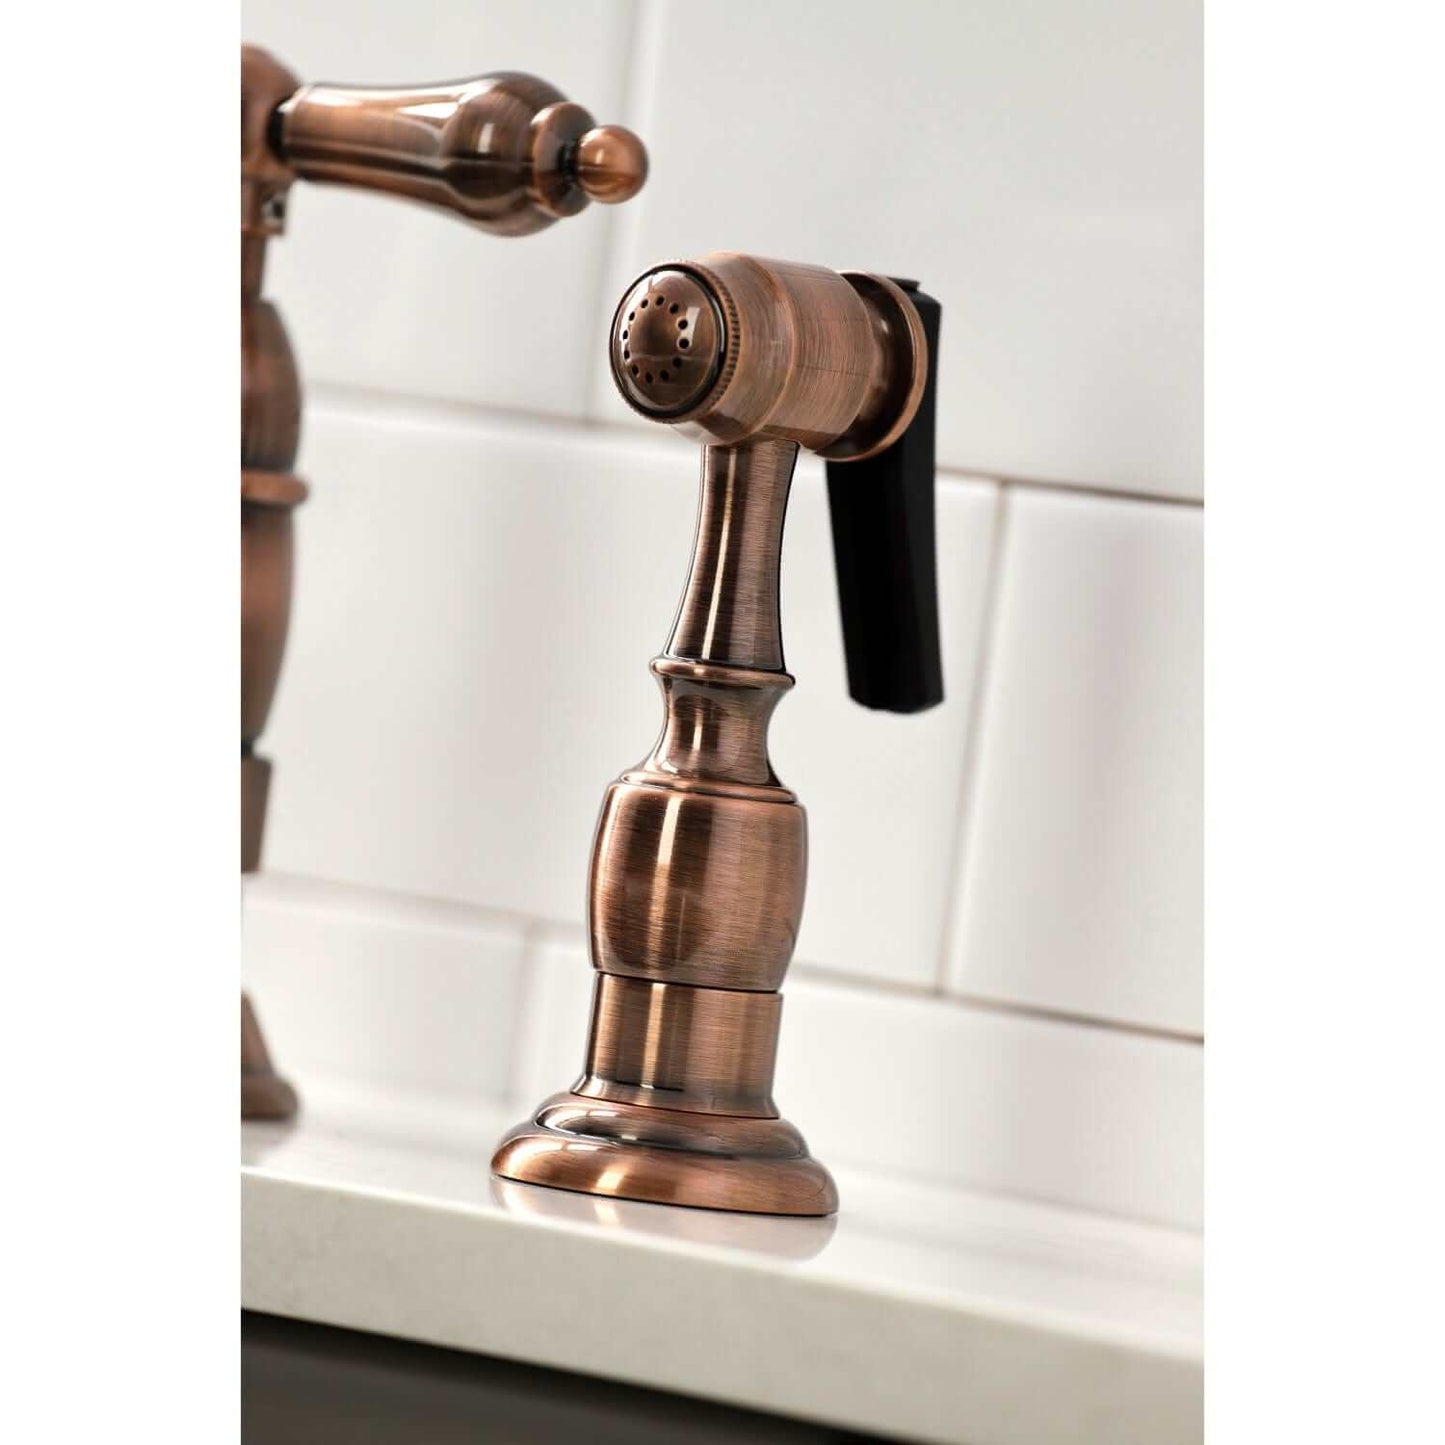 KINGSTON Brass Heritage Bridge Kitchen Faucet with Brass Sprayer - Antique Copper